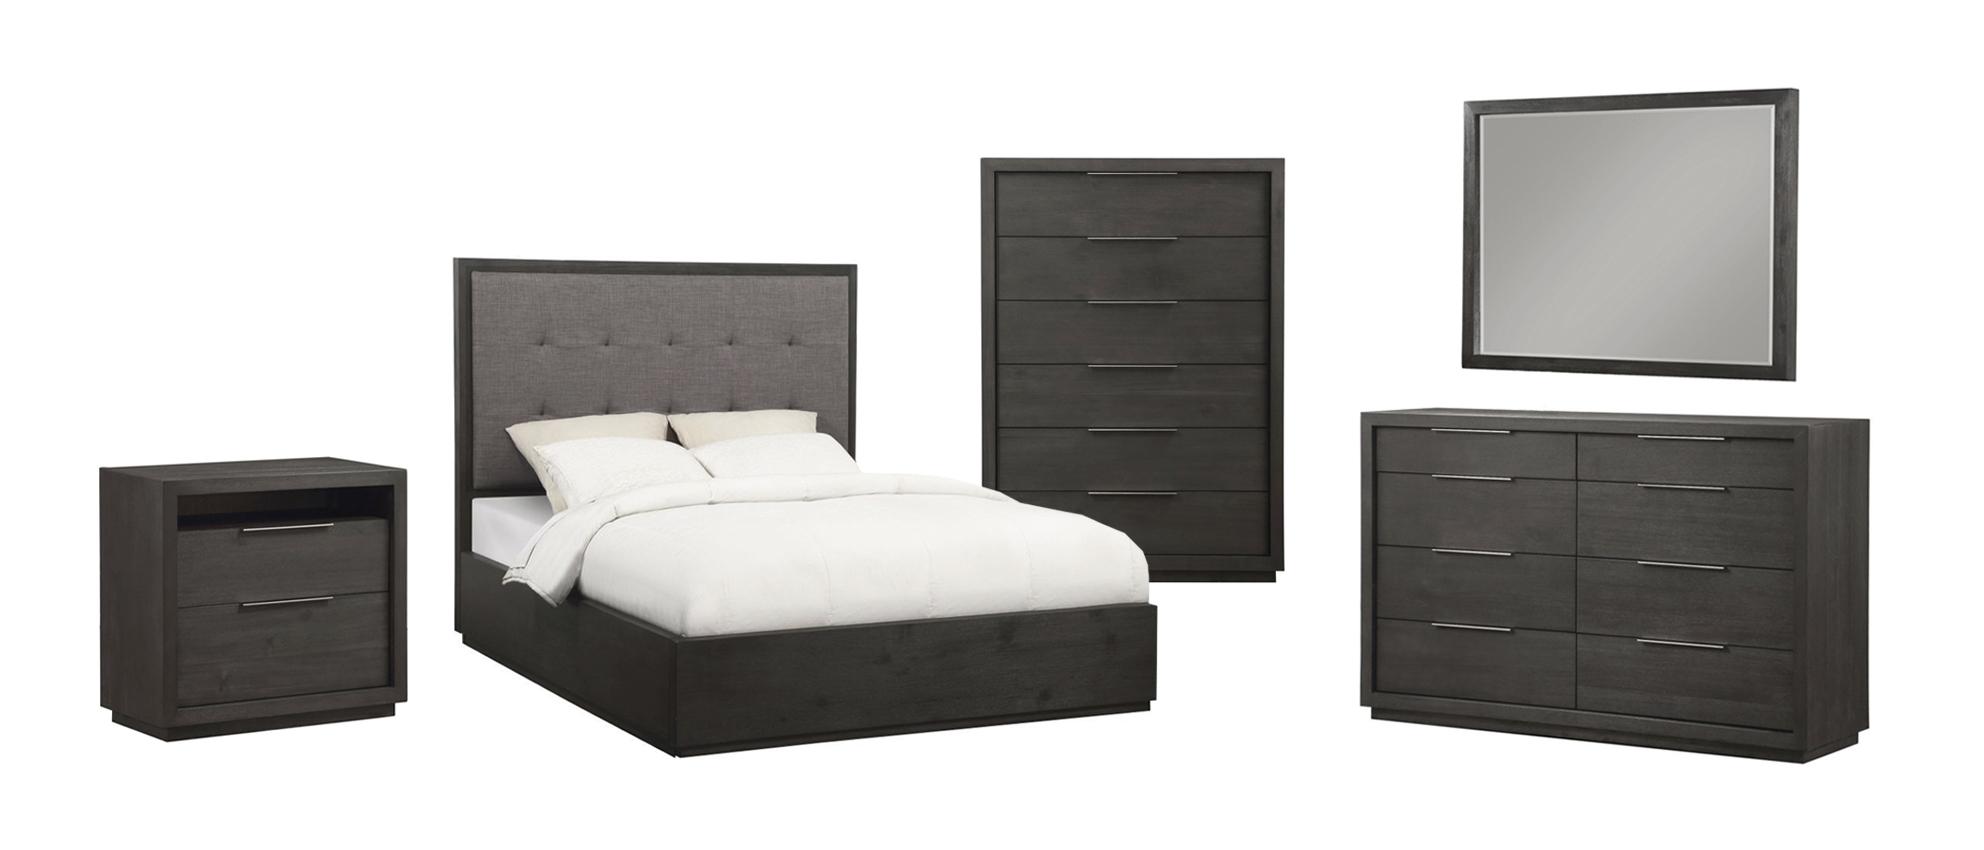 Contemporary Platform Bedroom Set OXFORD AZU5F7D-NDMC-5PC in Dark Gray Fabric